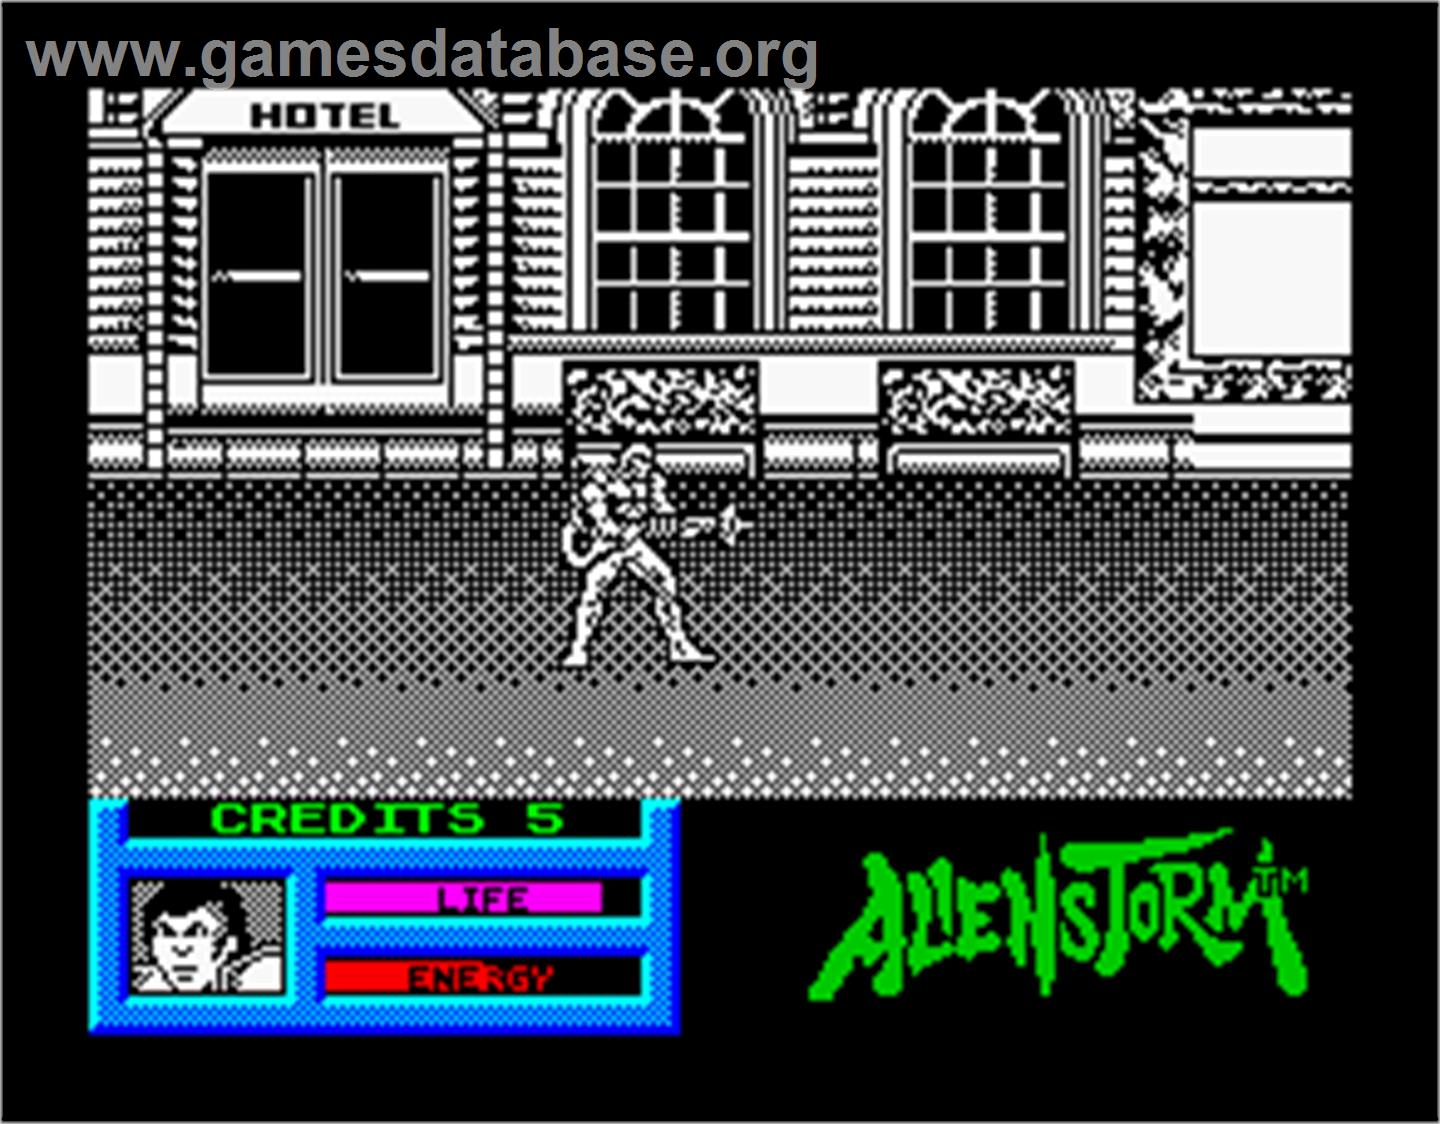 Alien Storm - Sinclair ZX Spectrum - Artwork - In Game